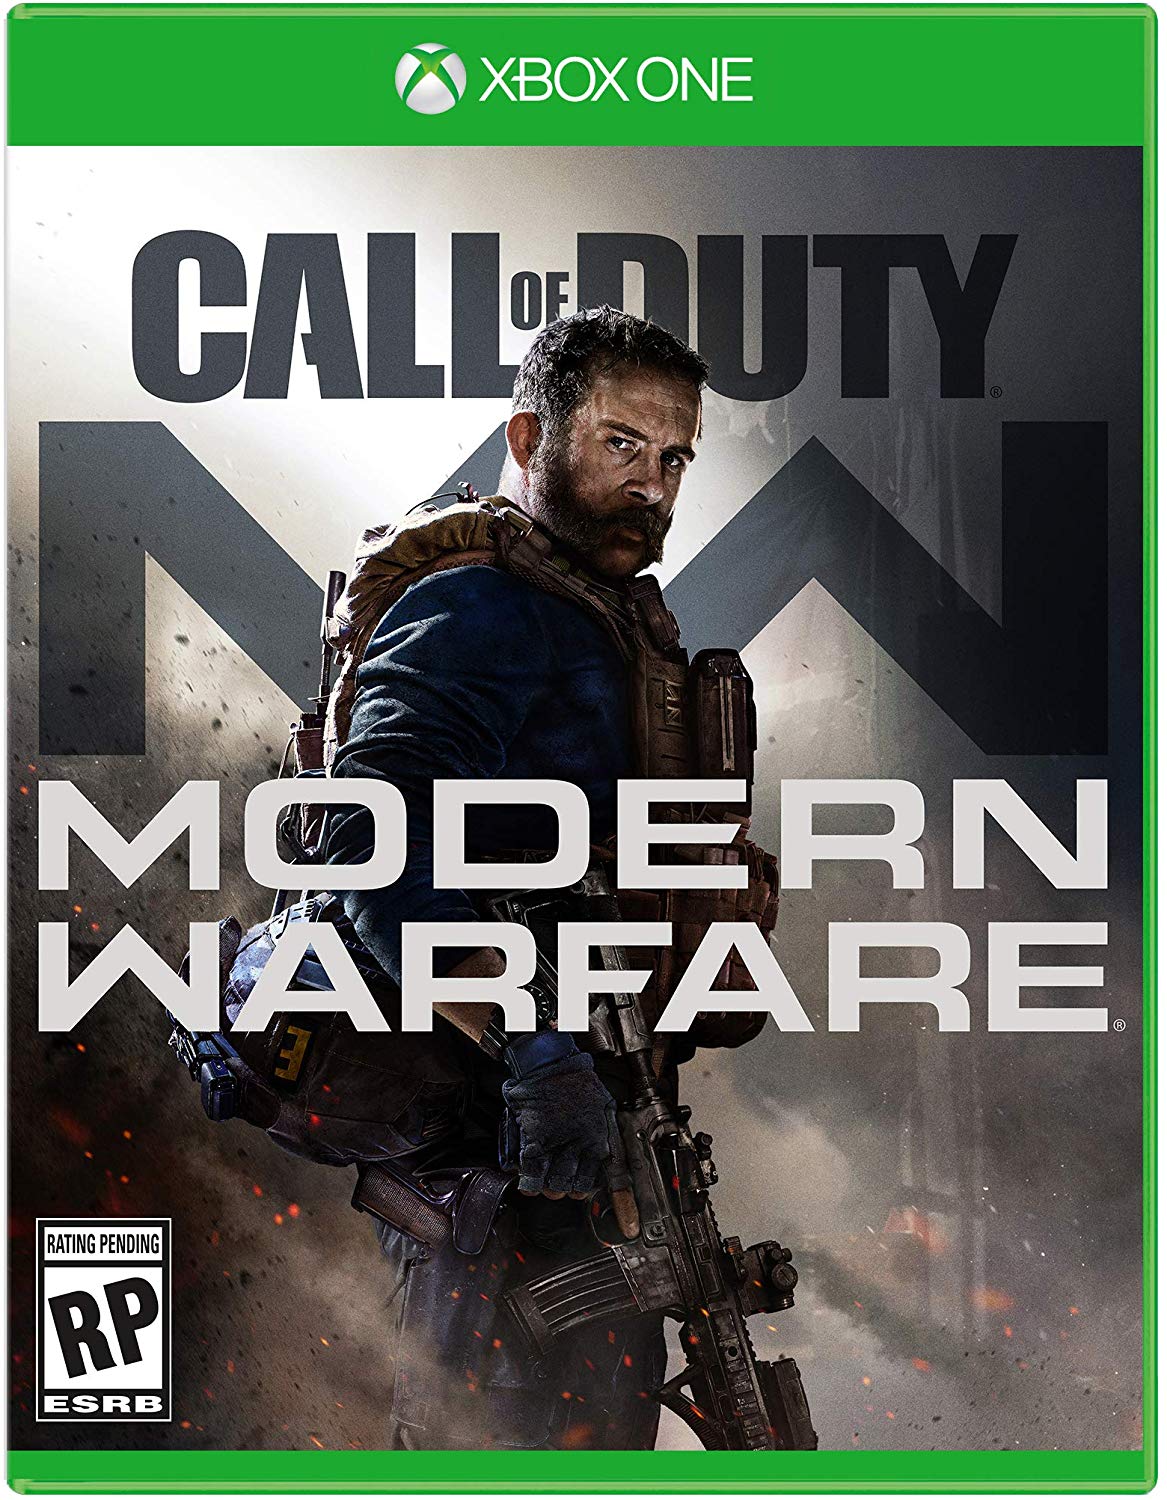 Call of Duty: Modern Warfare crashing Xbox One X consoles ... - 